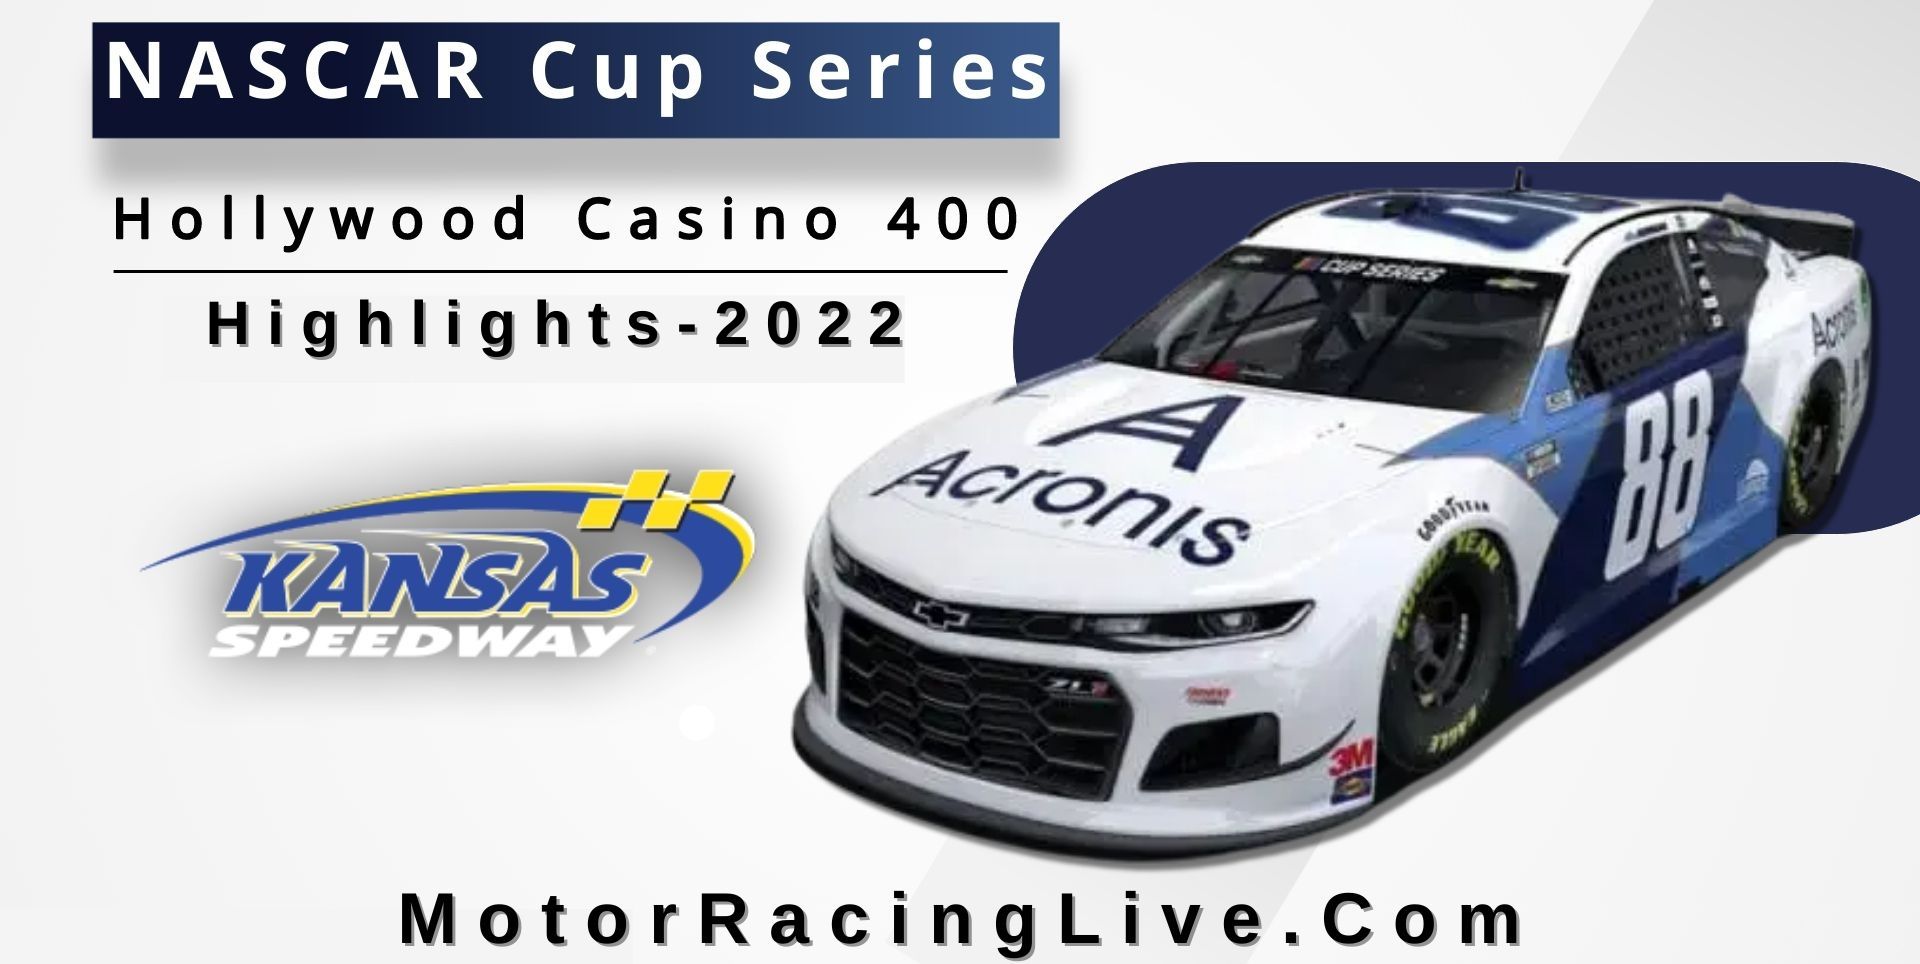 Hollywood Casino 400 Highlights 2022 NASCAR Cup